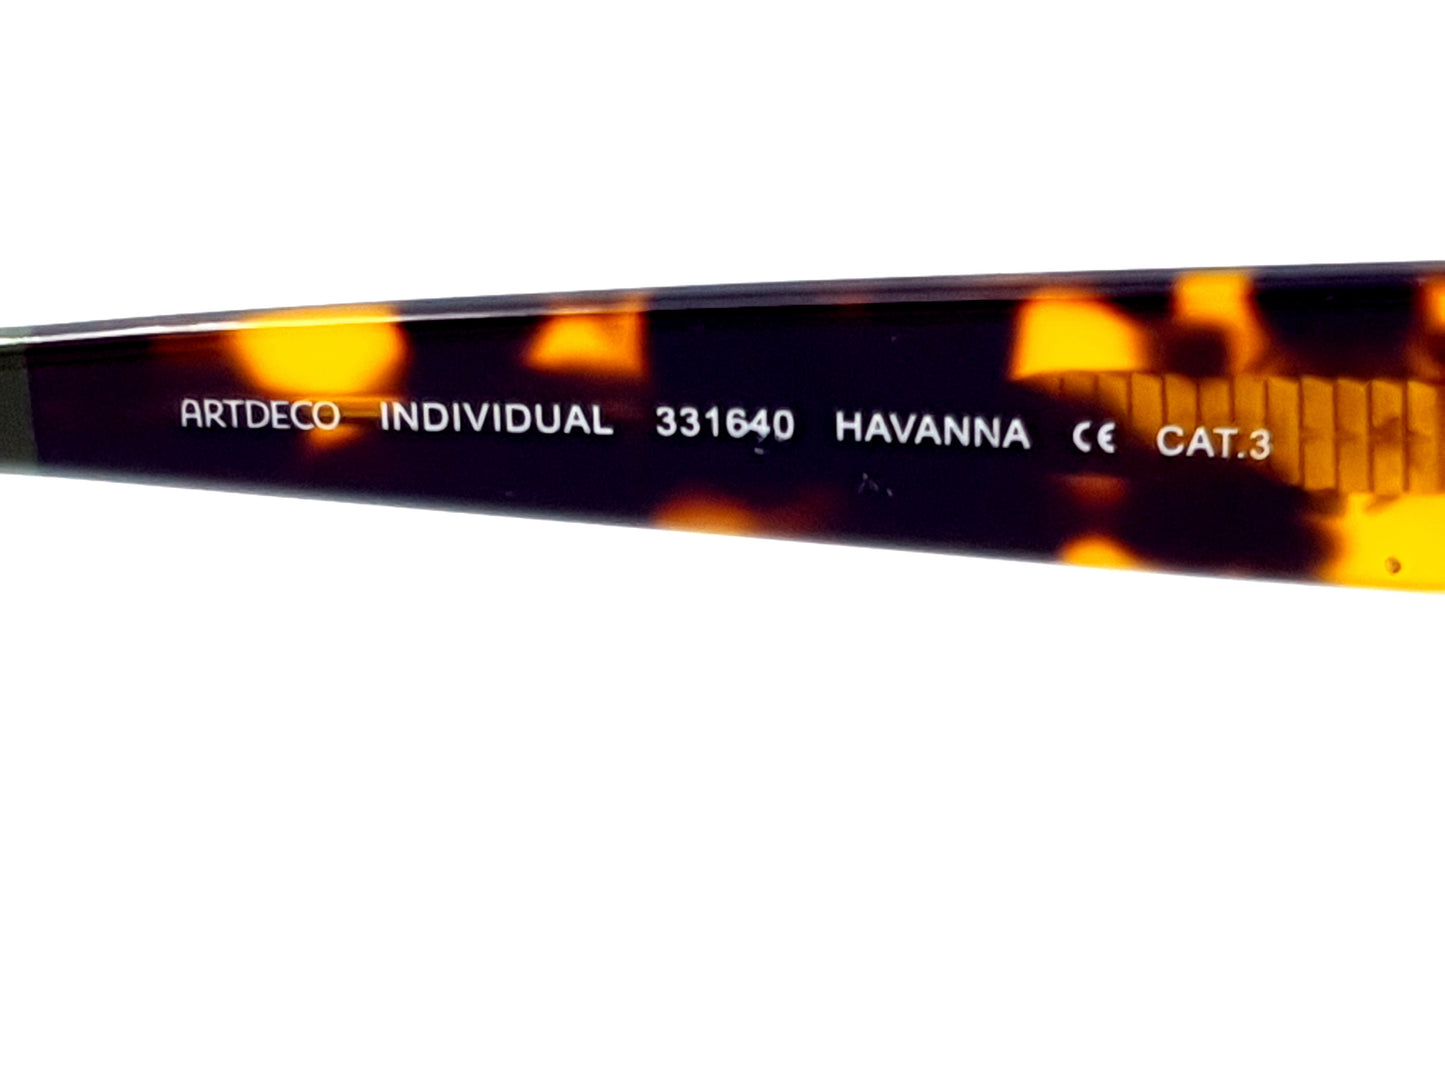 ARTDECO INDIVIDUAL HAVANA 331640